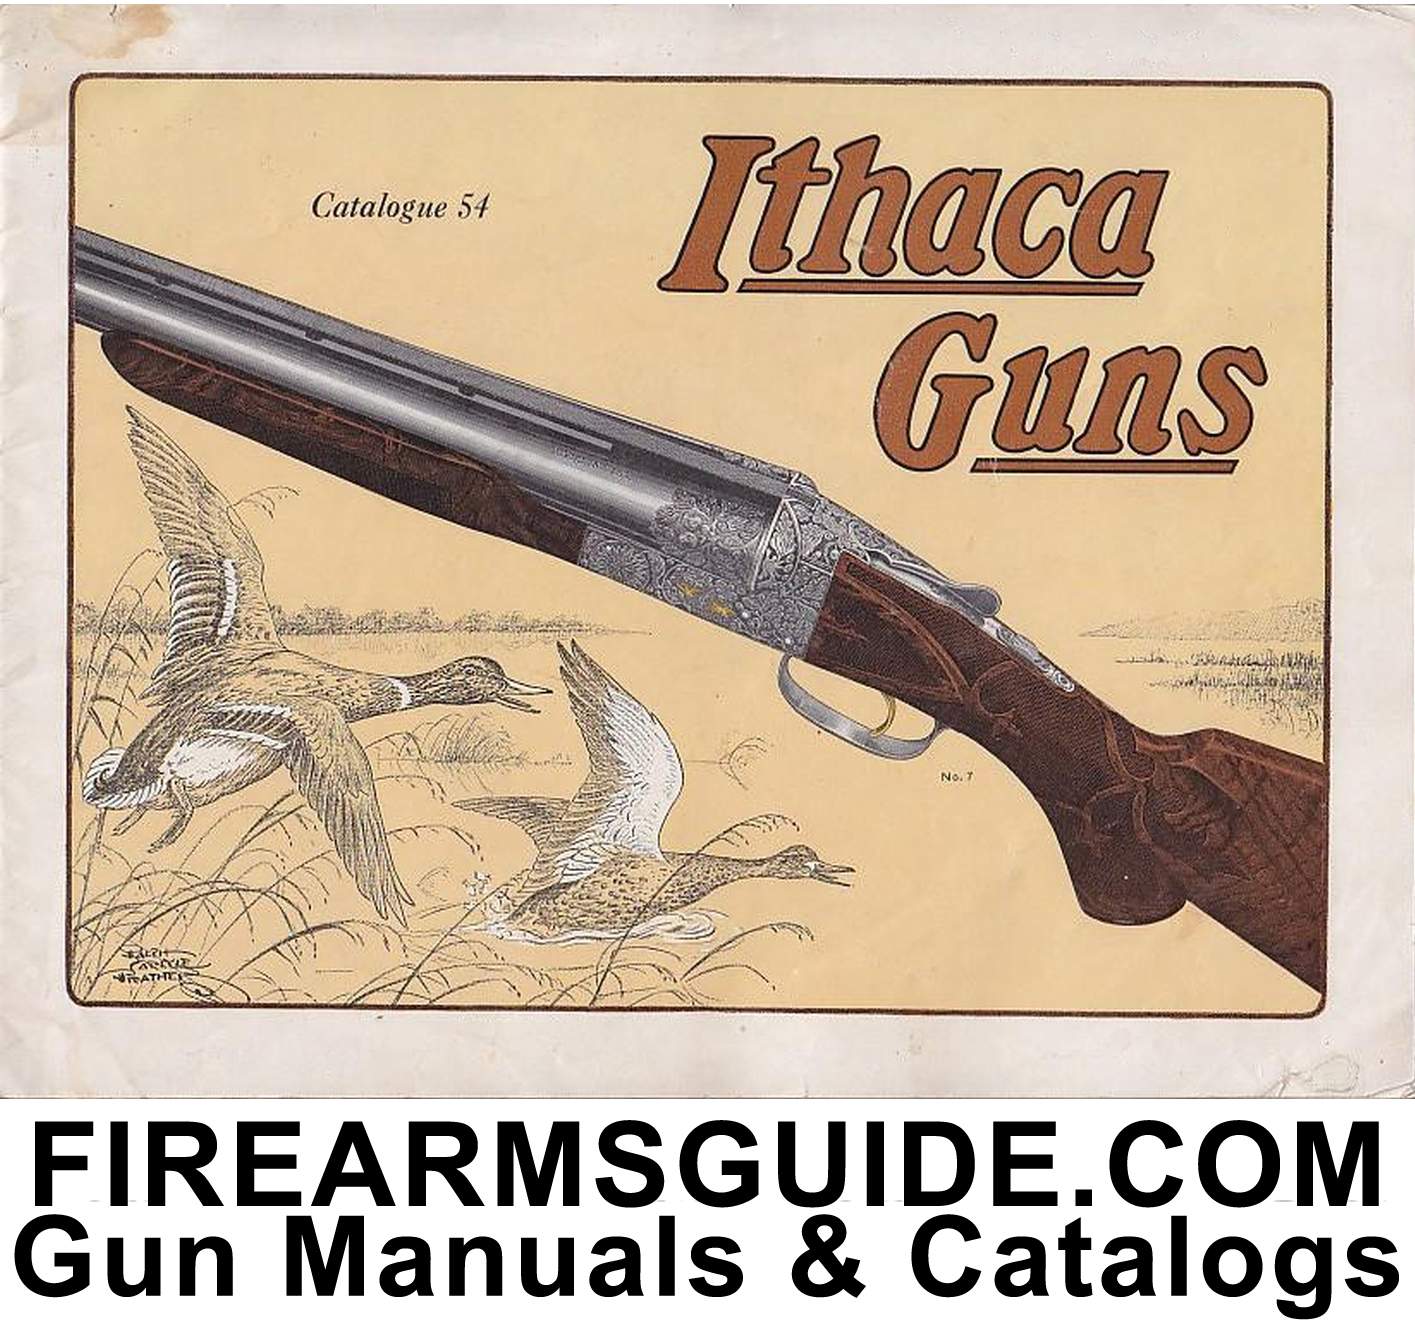 Printable Old Gun Catalogs in FirearmsGuide.com Gunsmithing Library